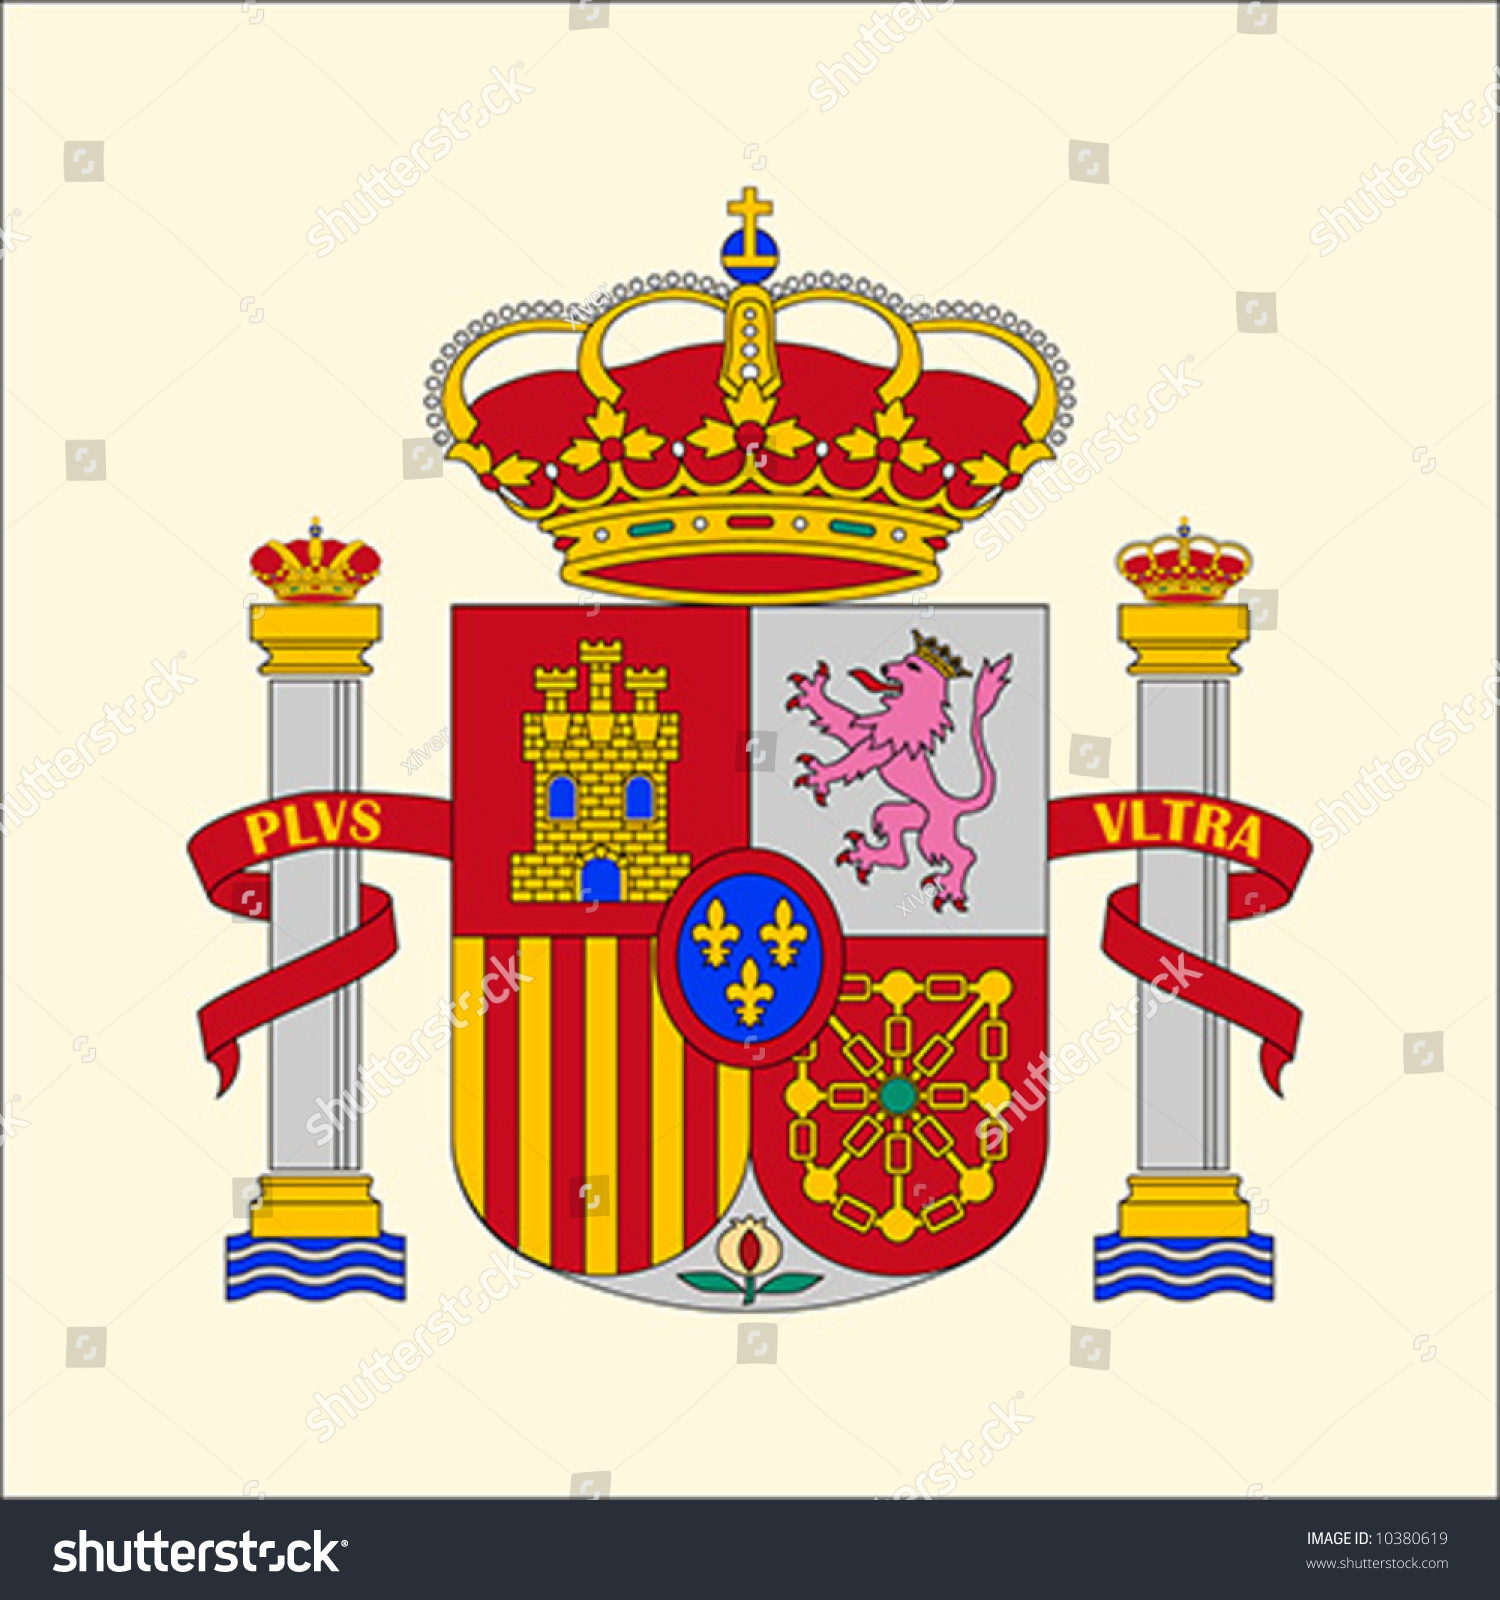 Coat Of Arms Of Spain Stock Vector Illustration 10380619 : Shutterstock